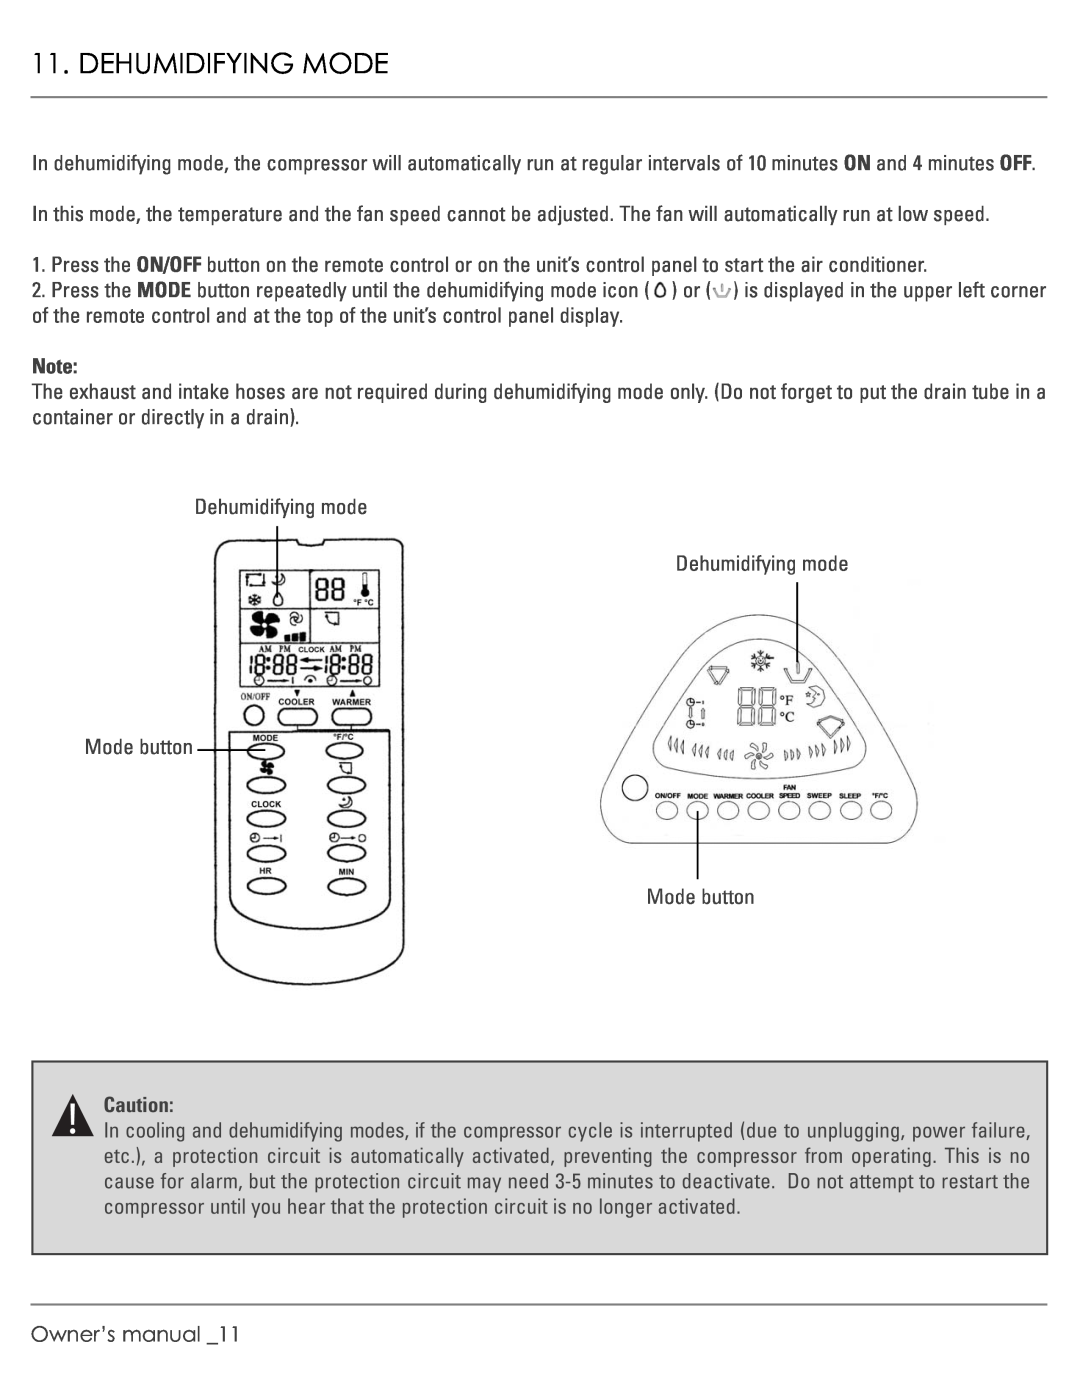 Williams M00045-V01 Dehumidifying Mode, Owner’s manual _11 